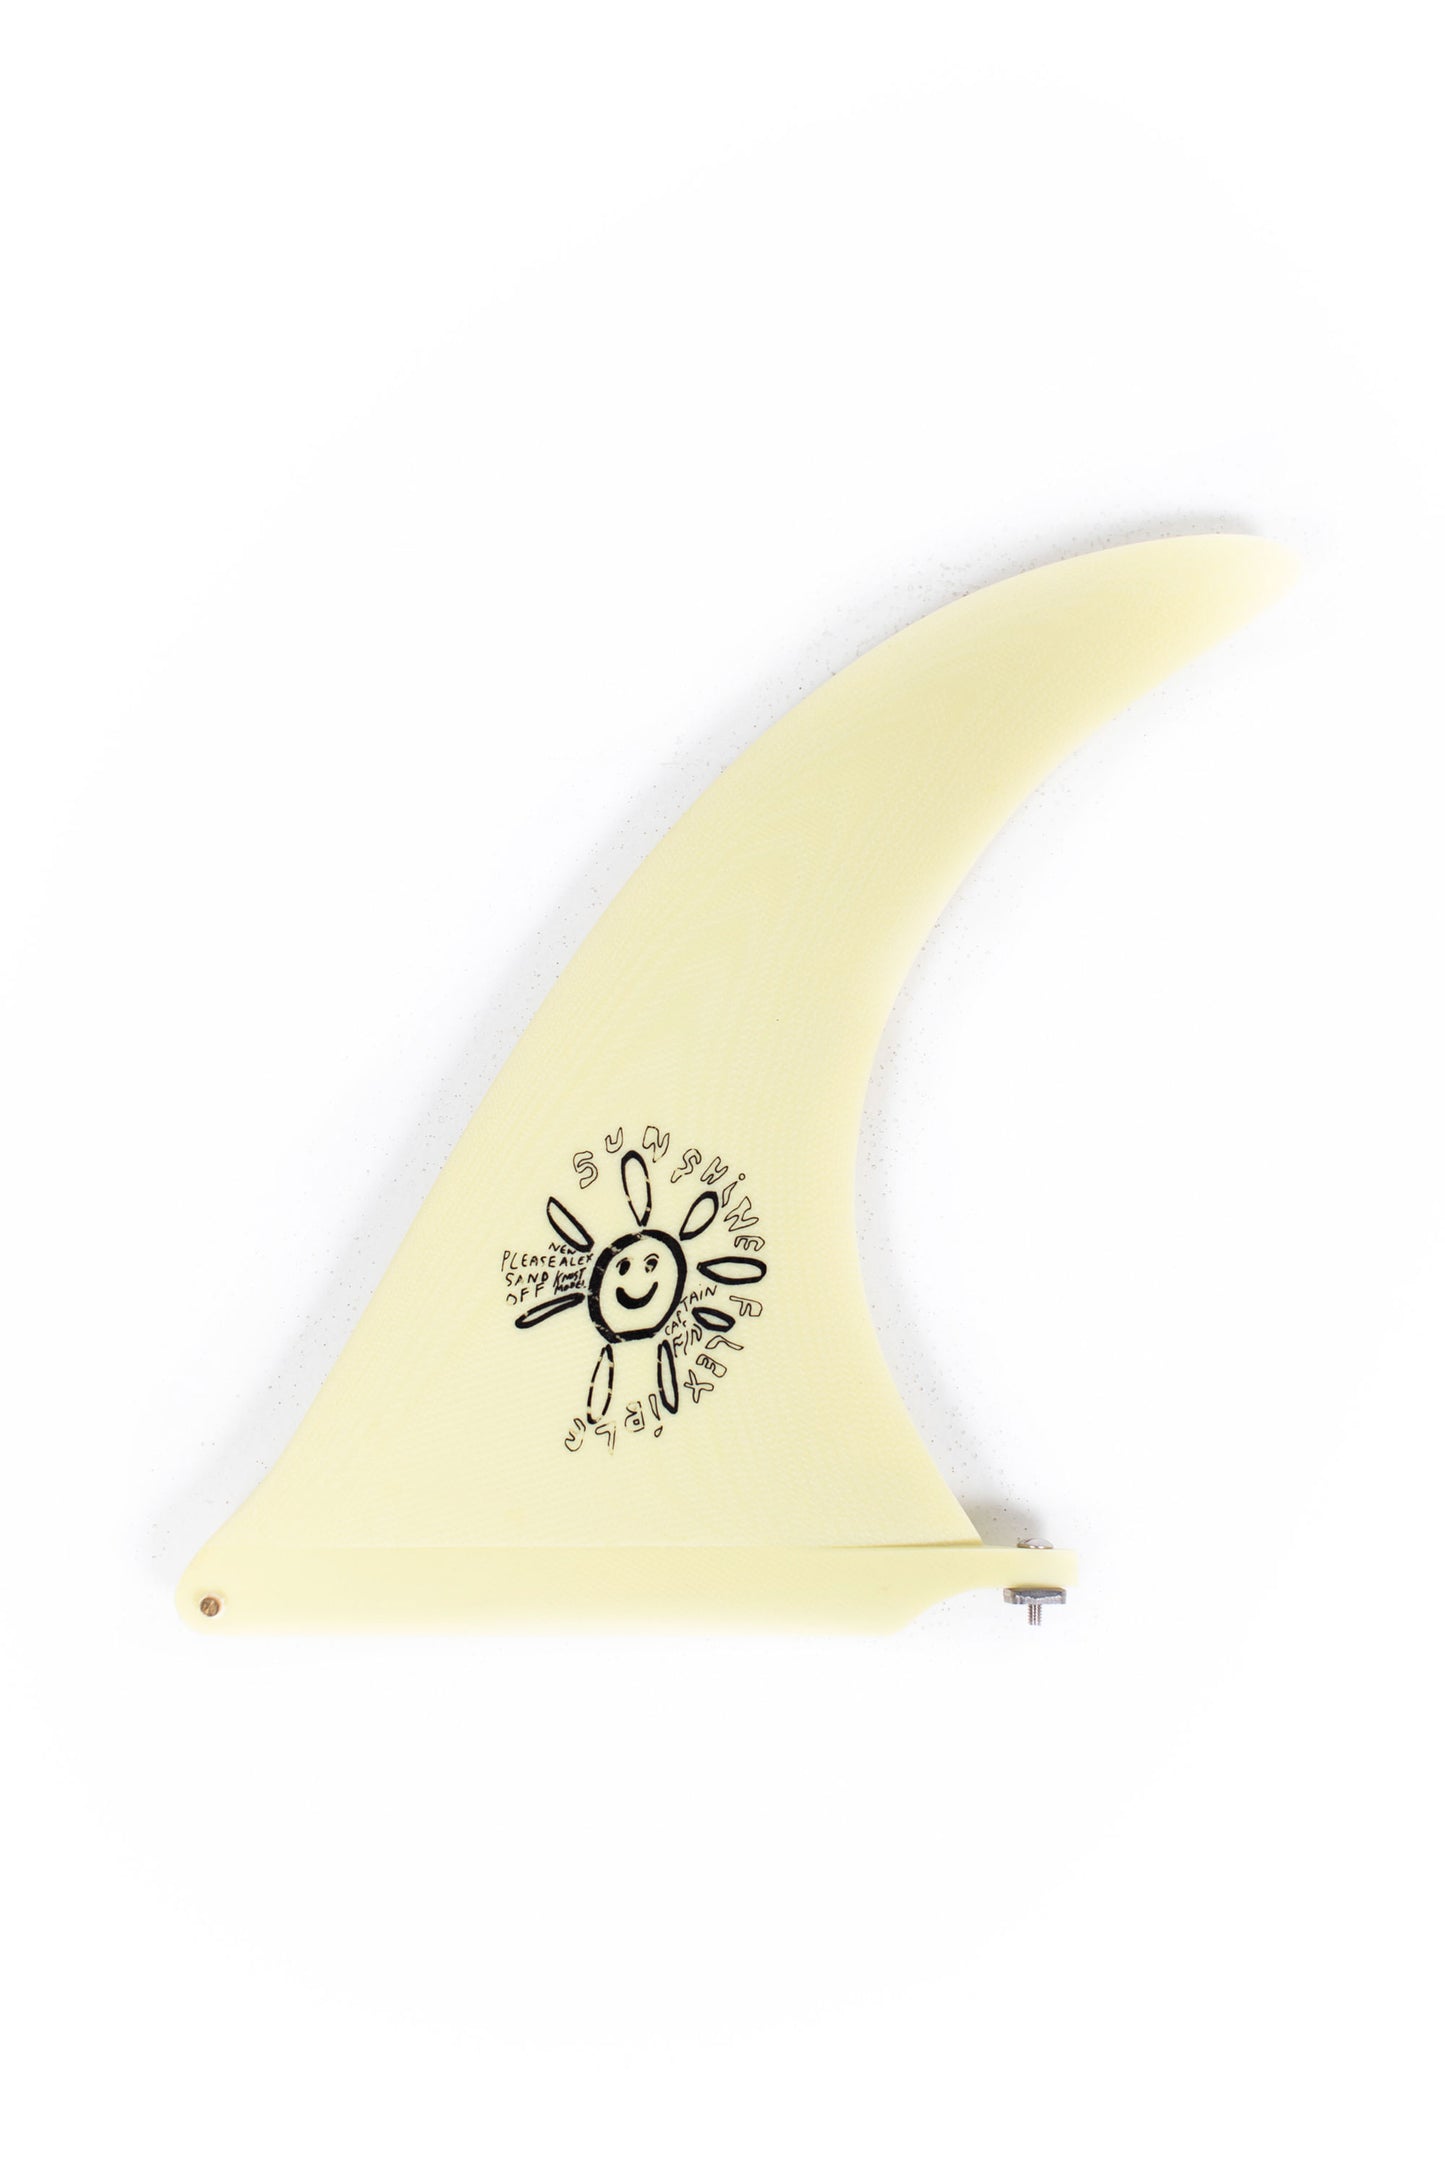 Pukas Surf Shop - Alex Knost Sunshine - 10 - 1 fin - yellow